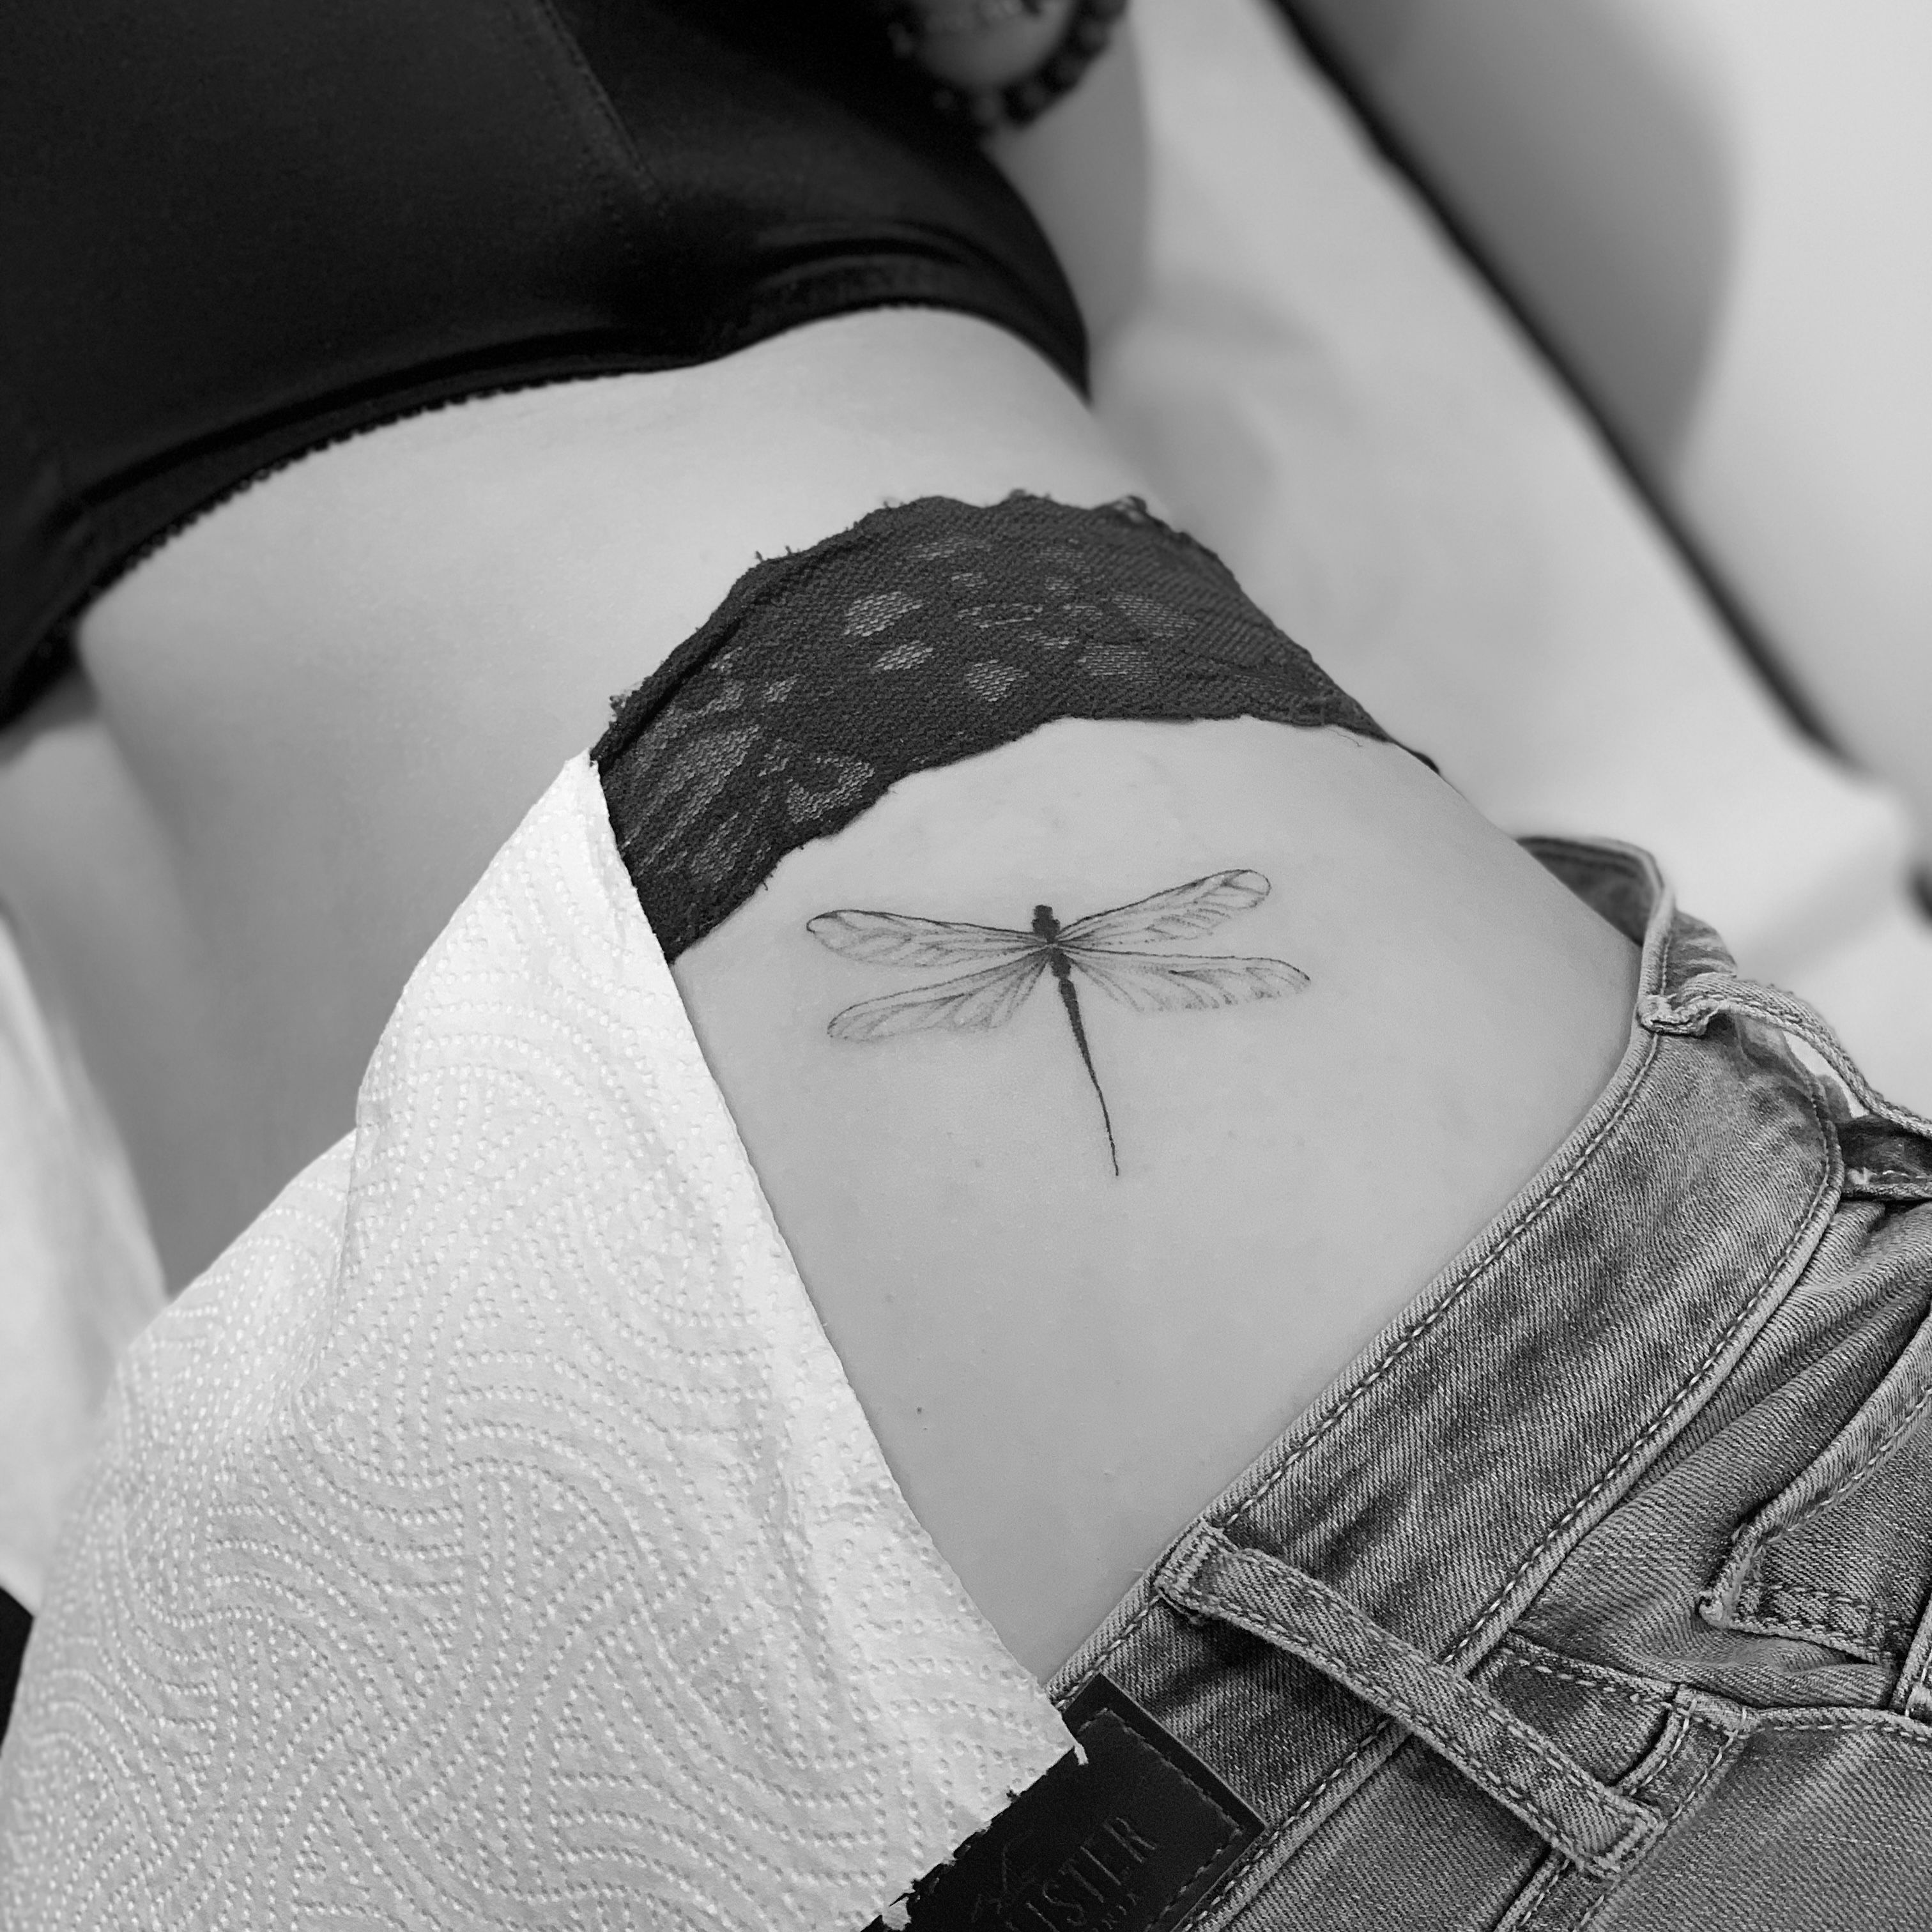 Single needle dragonfly tattoo on the forearm